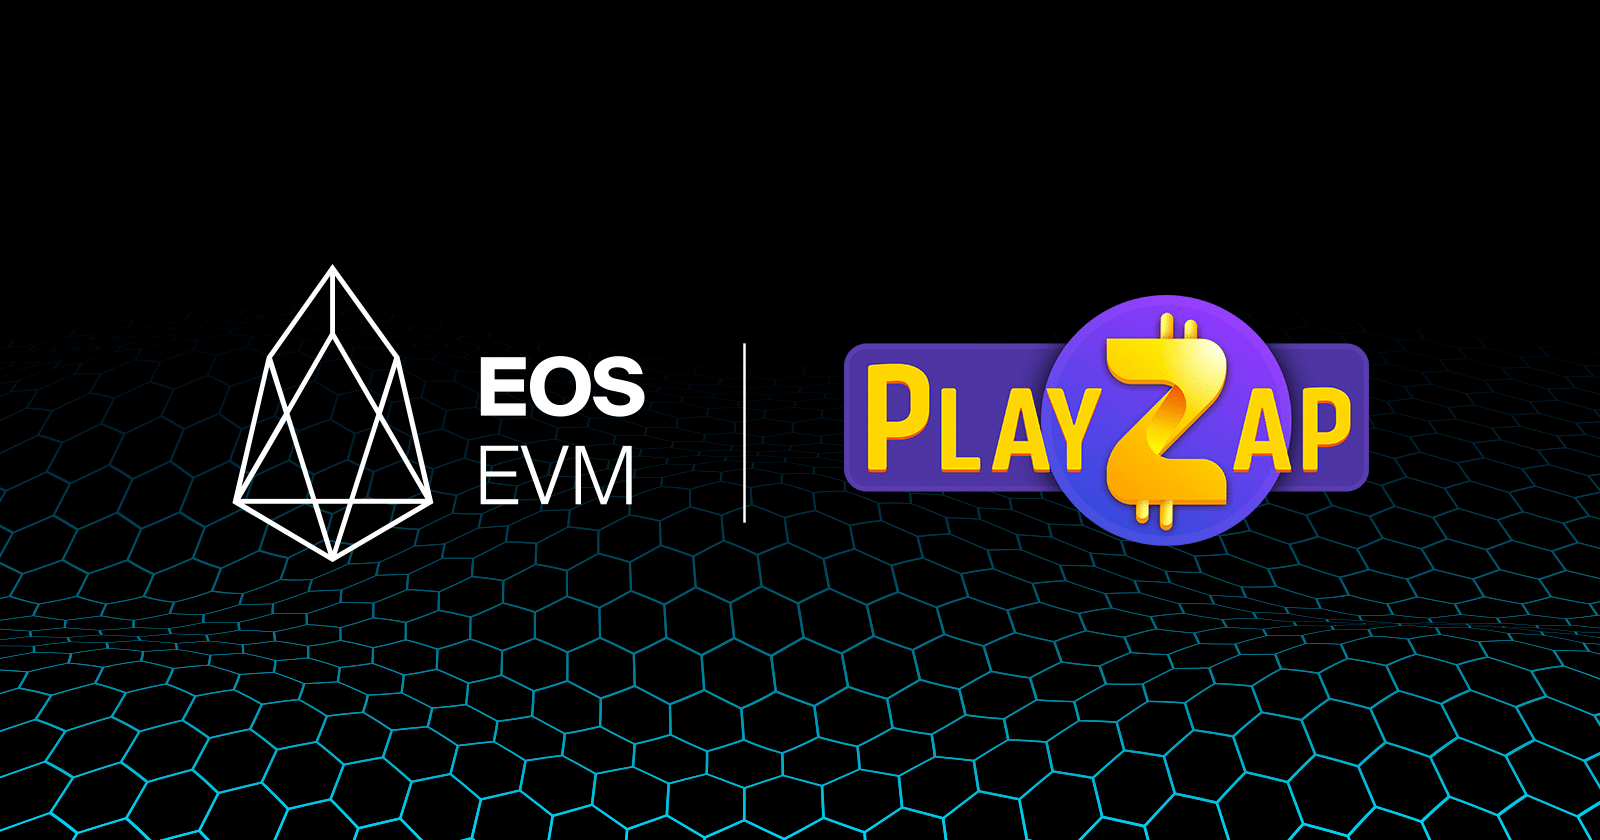 Introducing PlayZap on the EOS EVM